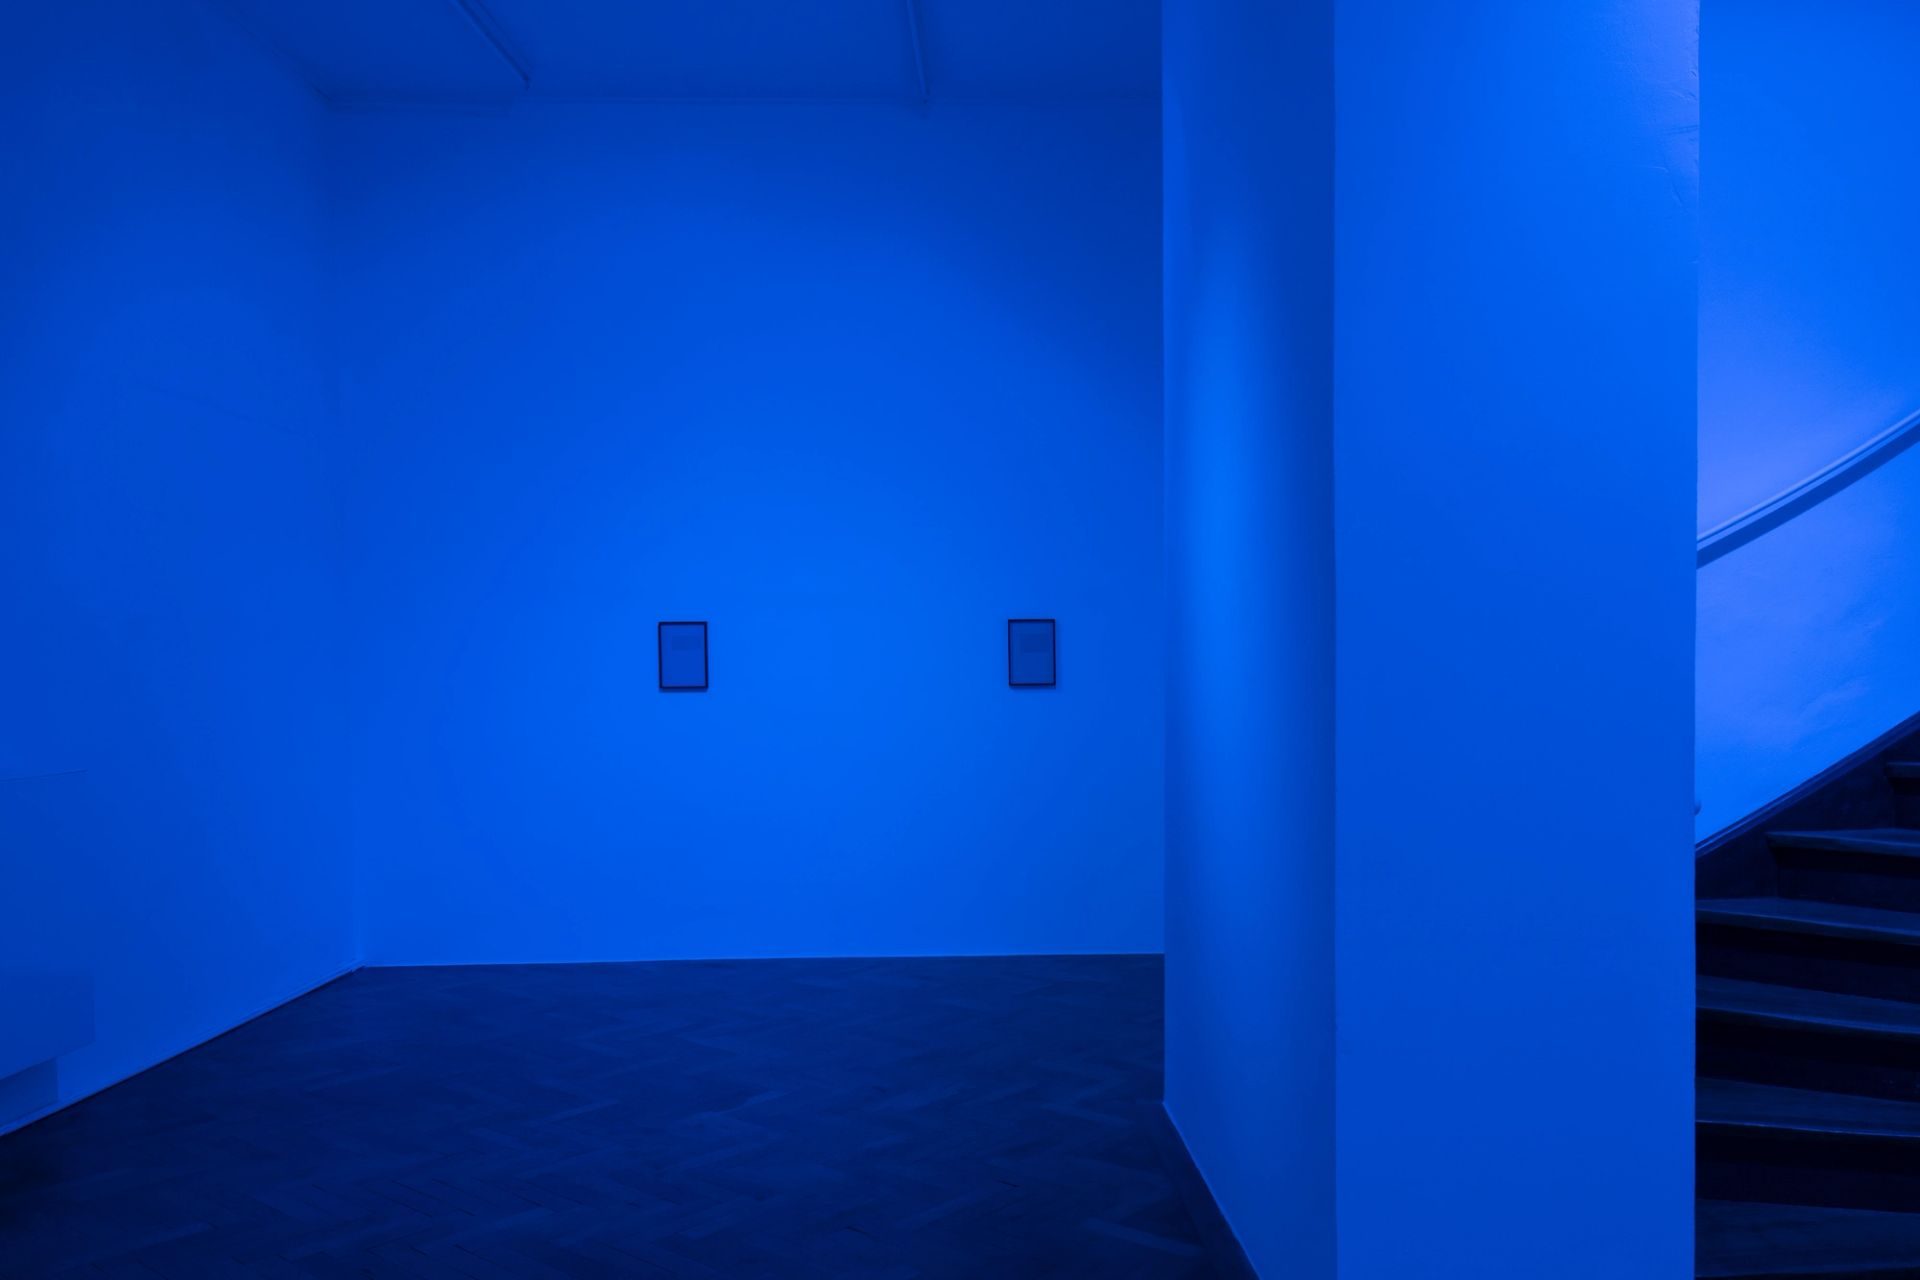 Thomas Geiger, “Dreams That Money Can Buy”, 2022, exhibition view, photo: Sebastian Kissel